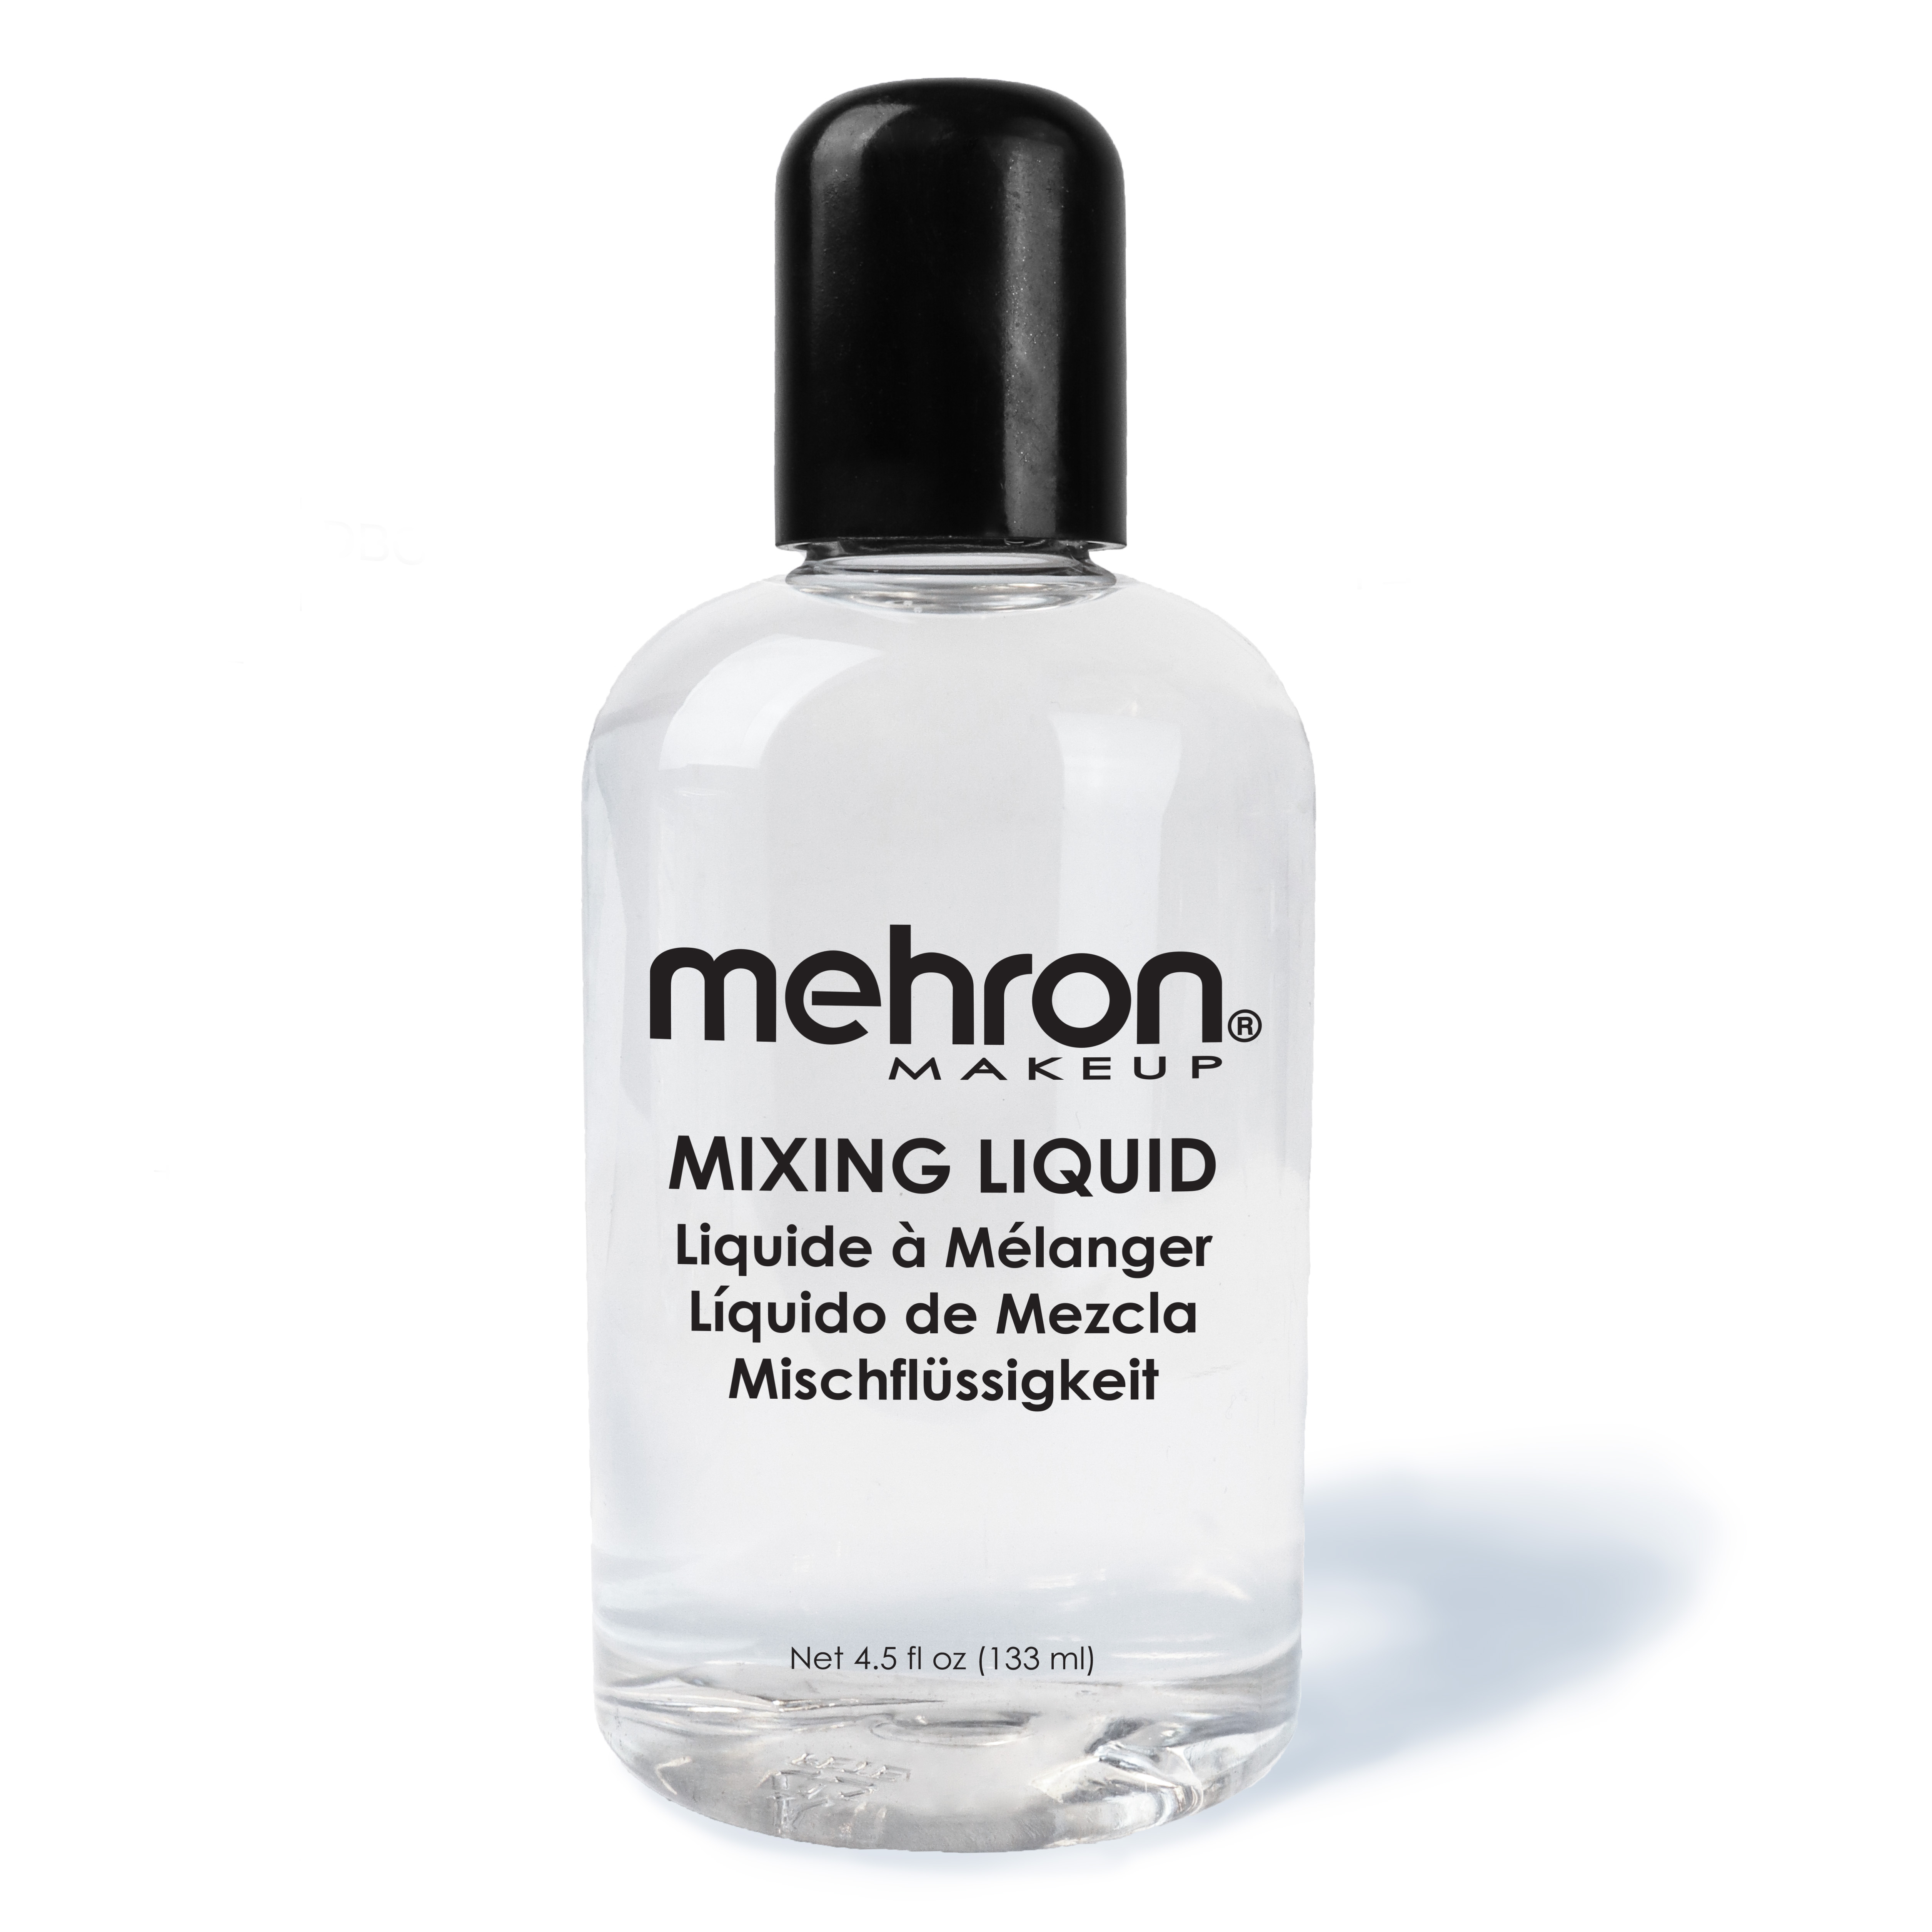 How to Airbrush Using Mehron's Liquid Makeup and Mixing Liquid 